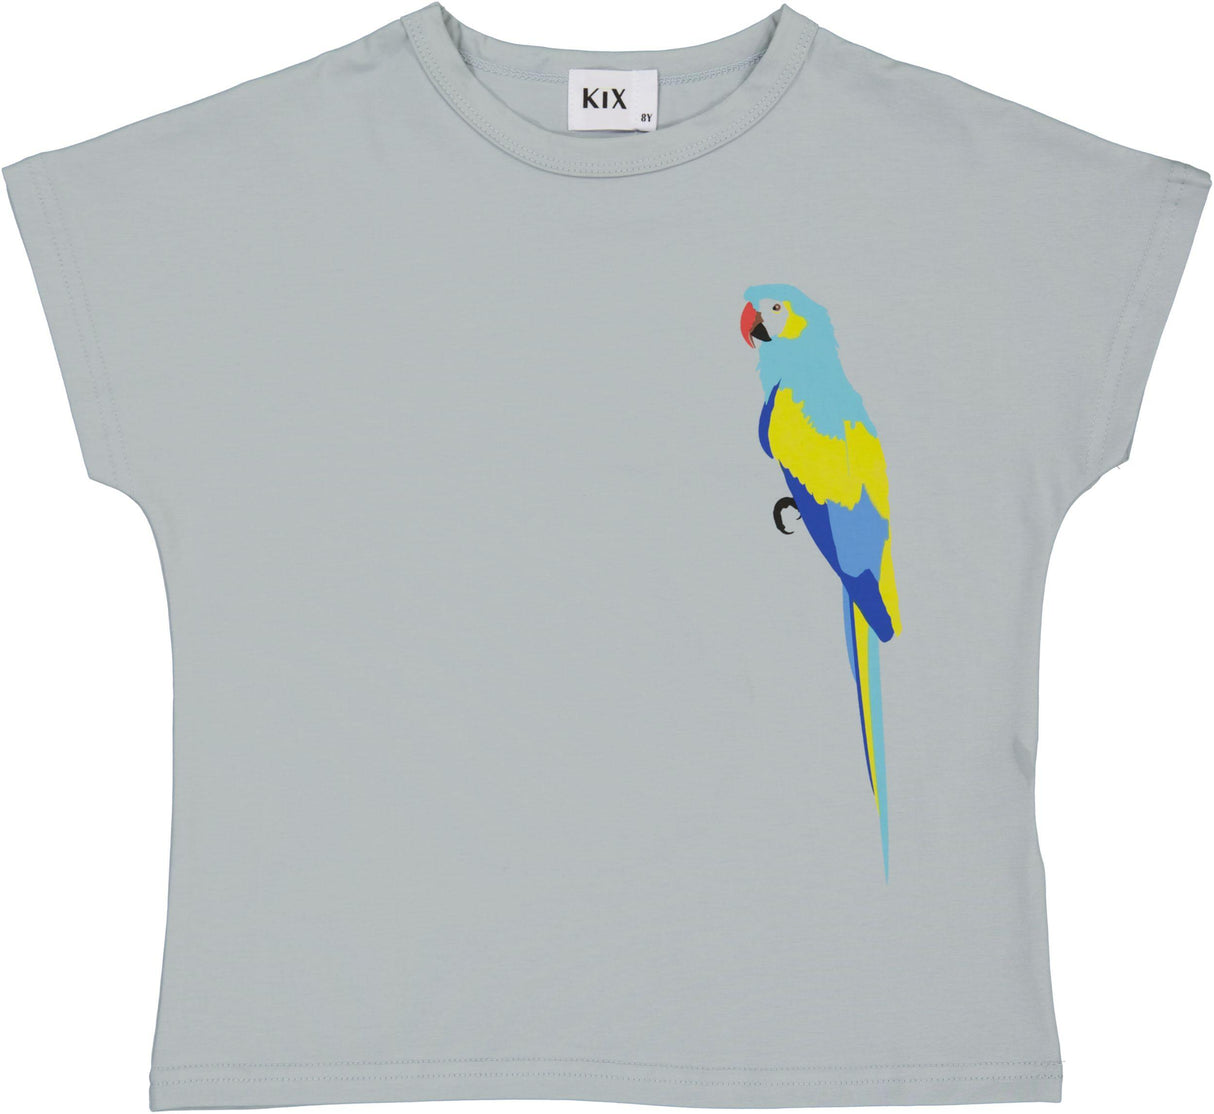 Kix Boys Girls Parrot Print Short Sleeve T-shirt - 1216